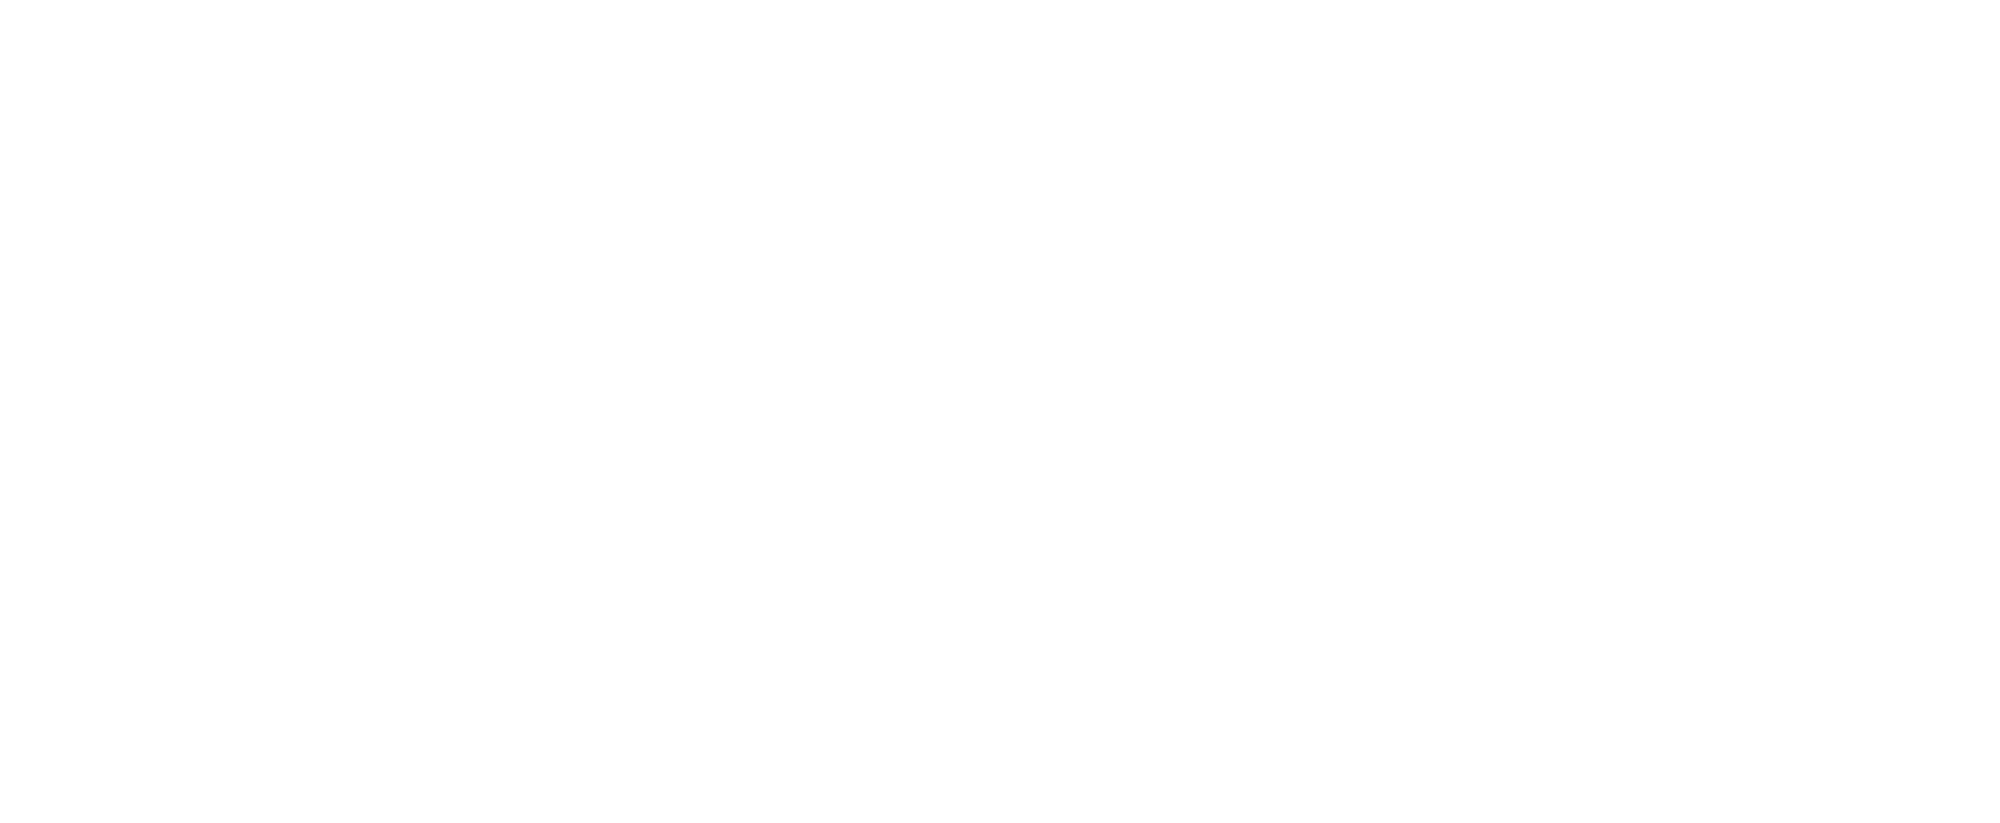 battersea-locksmiths-ltd-high-resolution-logo-white-transparent